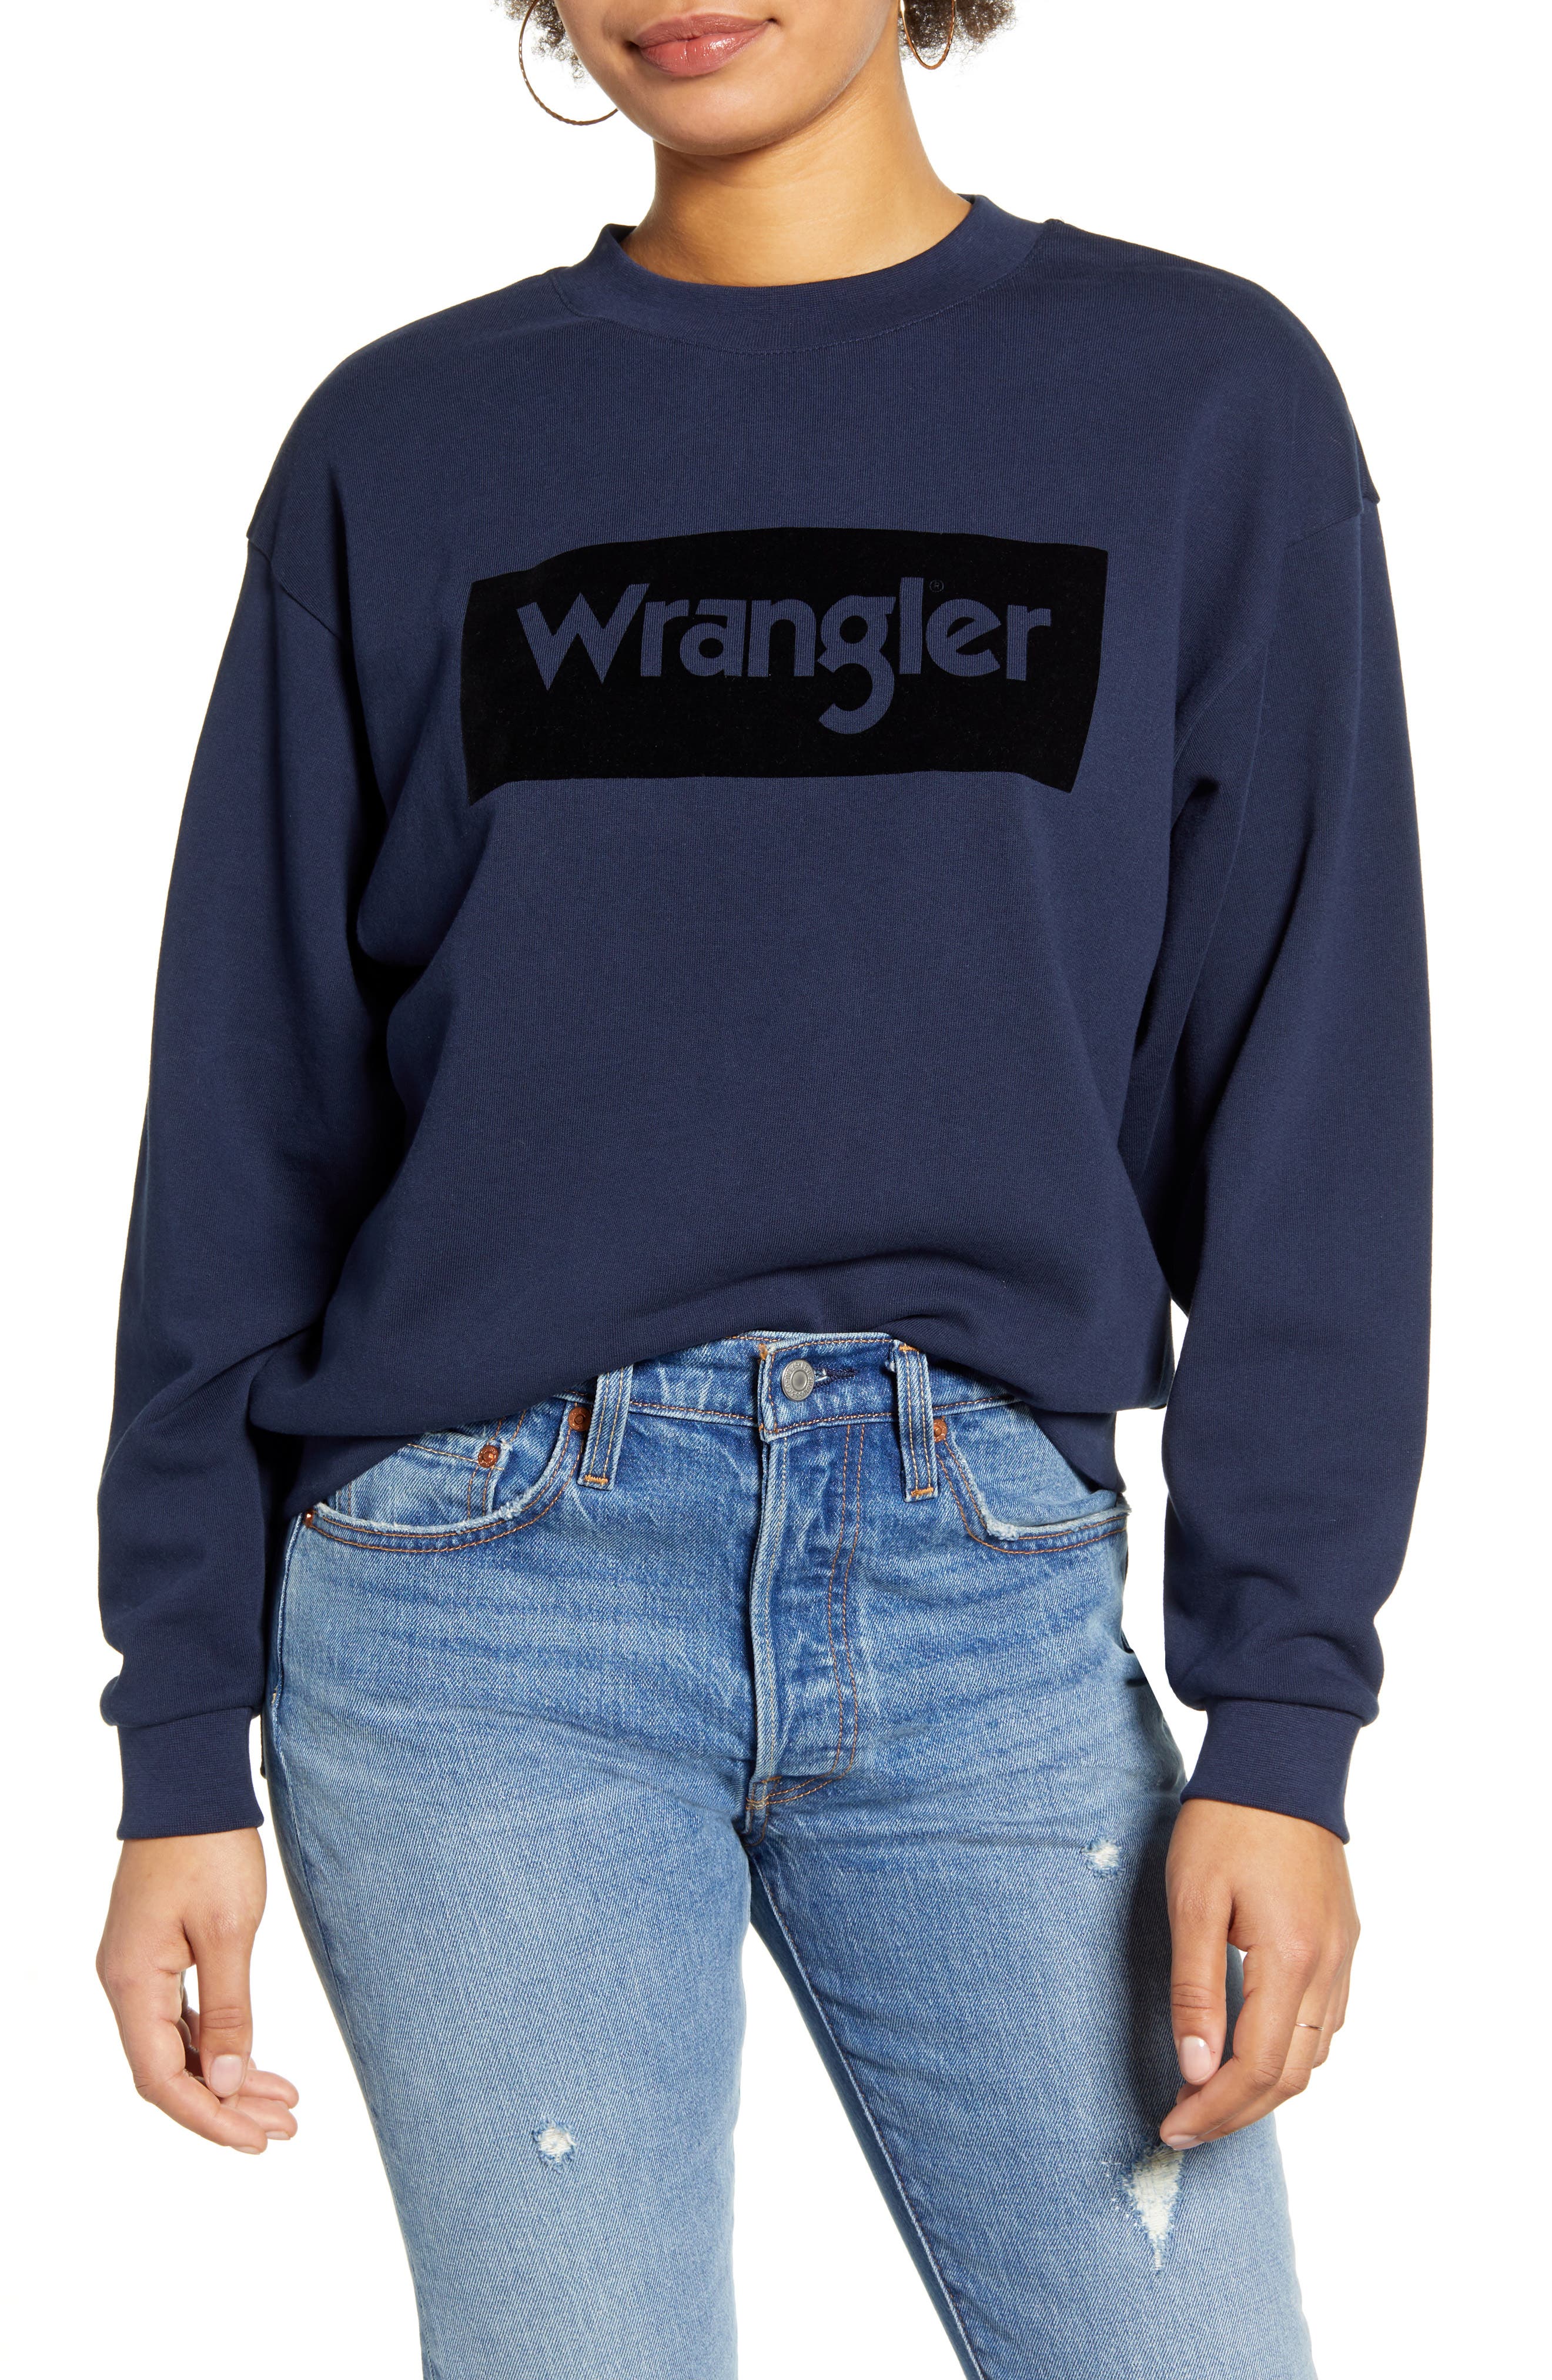 wrangler retro sweatshirt